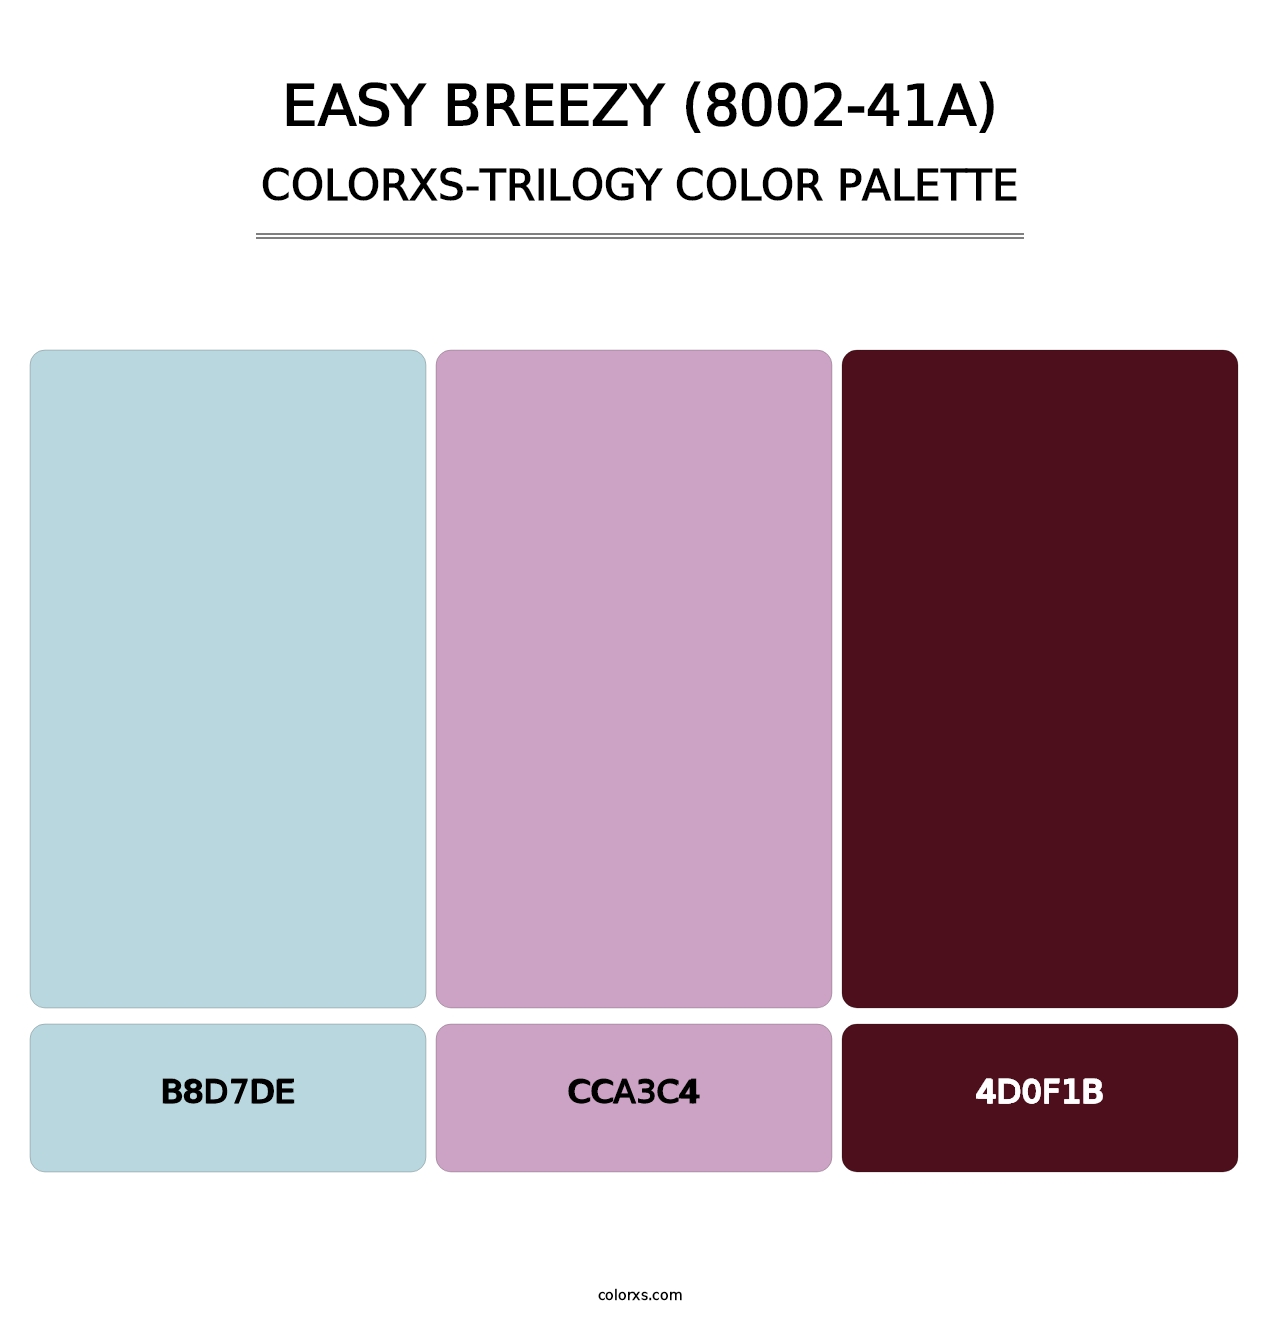 Easy Breezy (8002-41A) - Colorxs Trilogy Palette